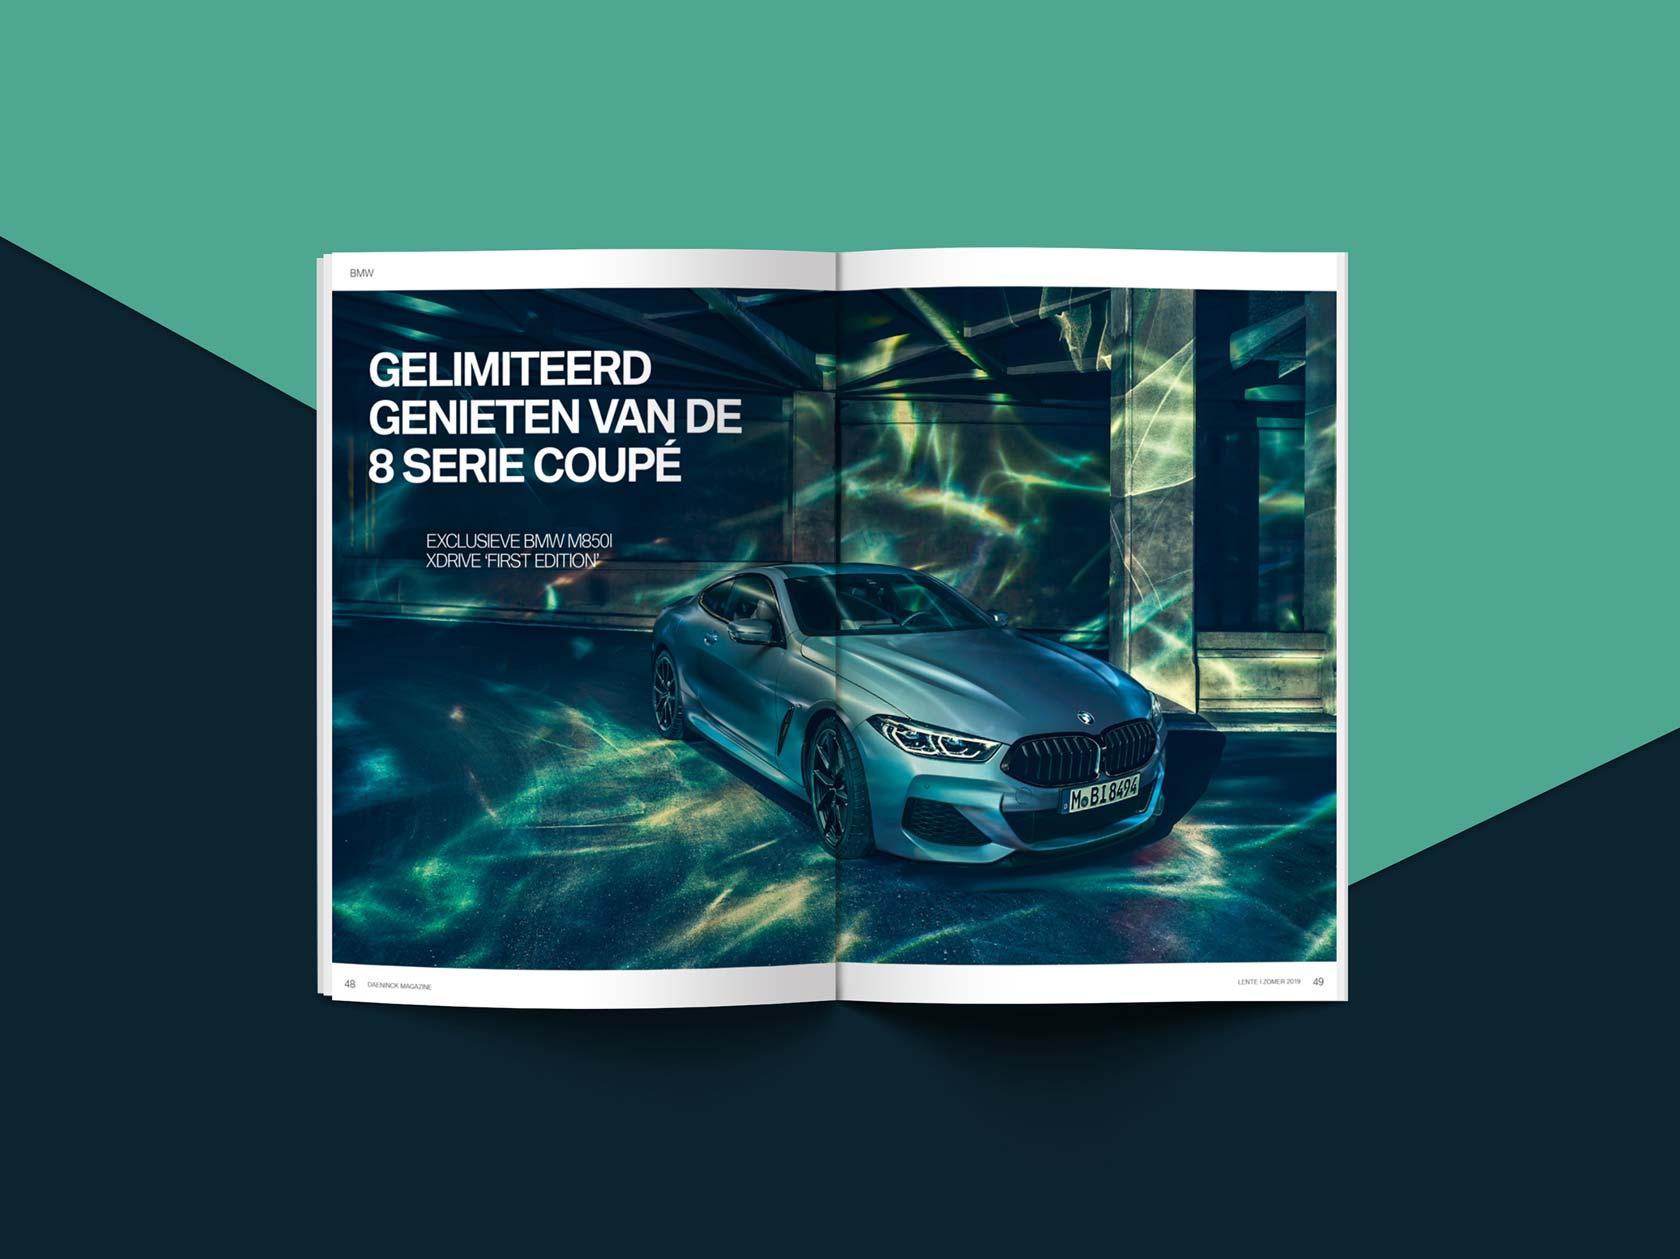 BMW Daeninck Magazine